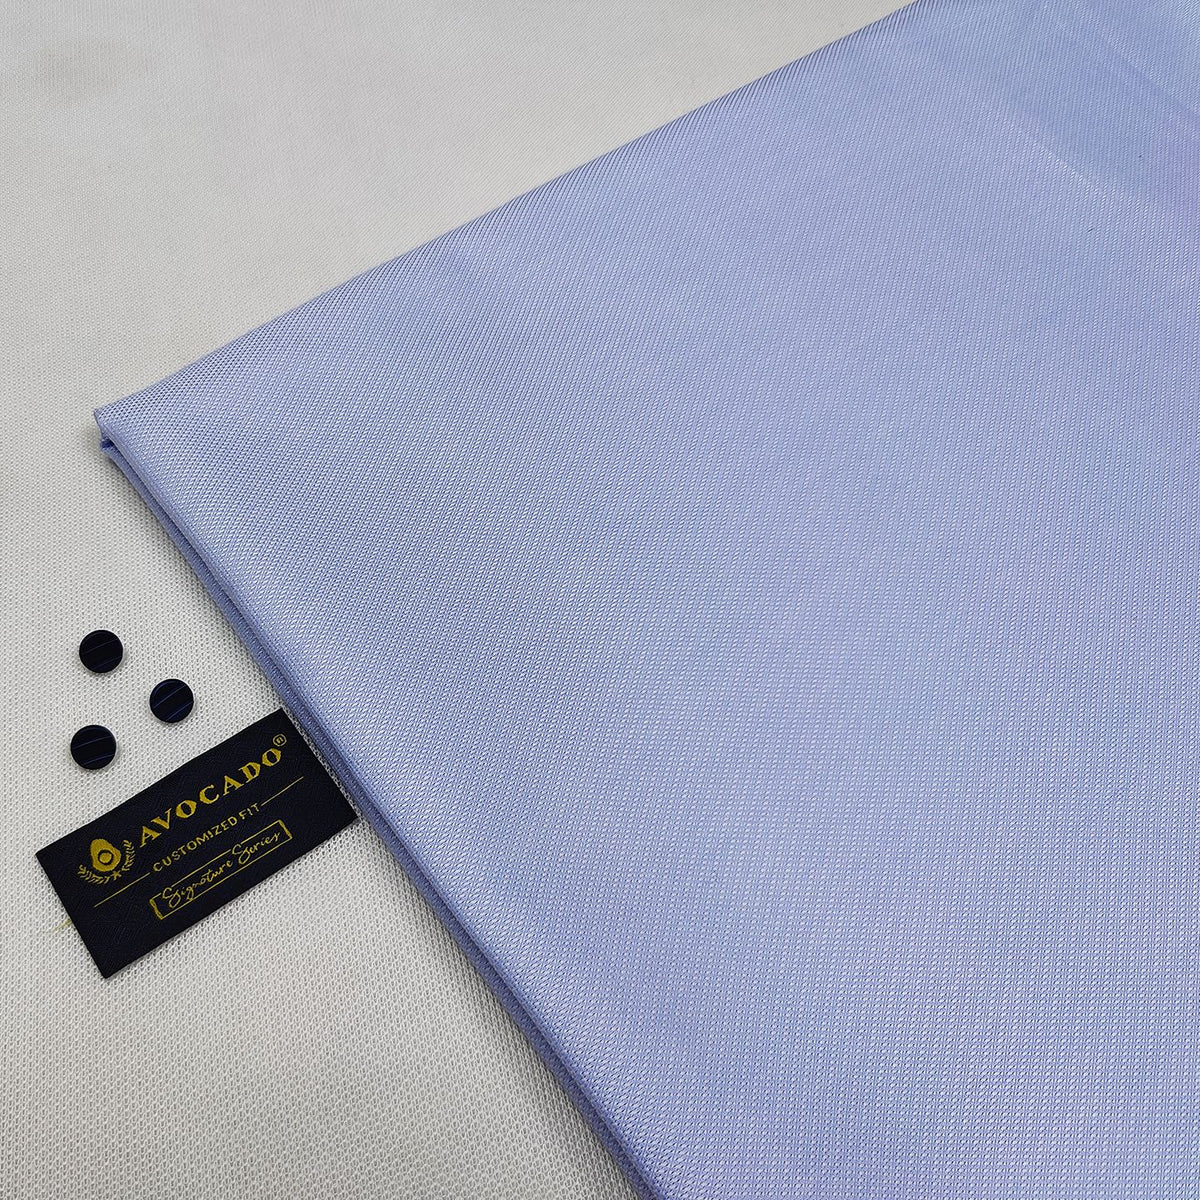 Sky Blue Shemray Cross Texture kameez shalwar Fabric with Buttons & label